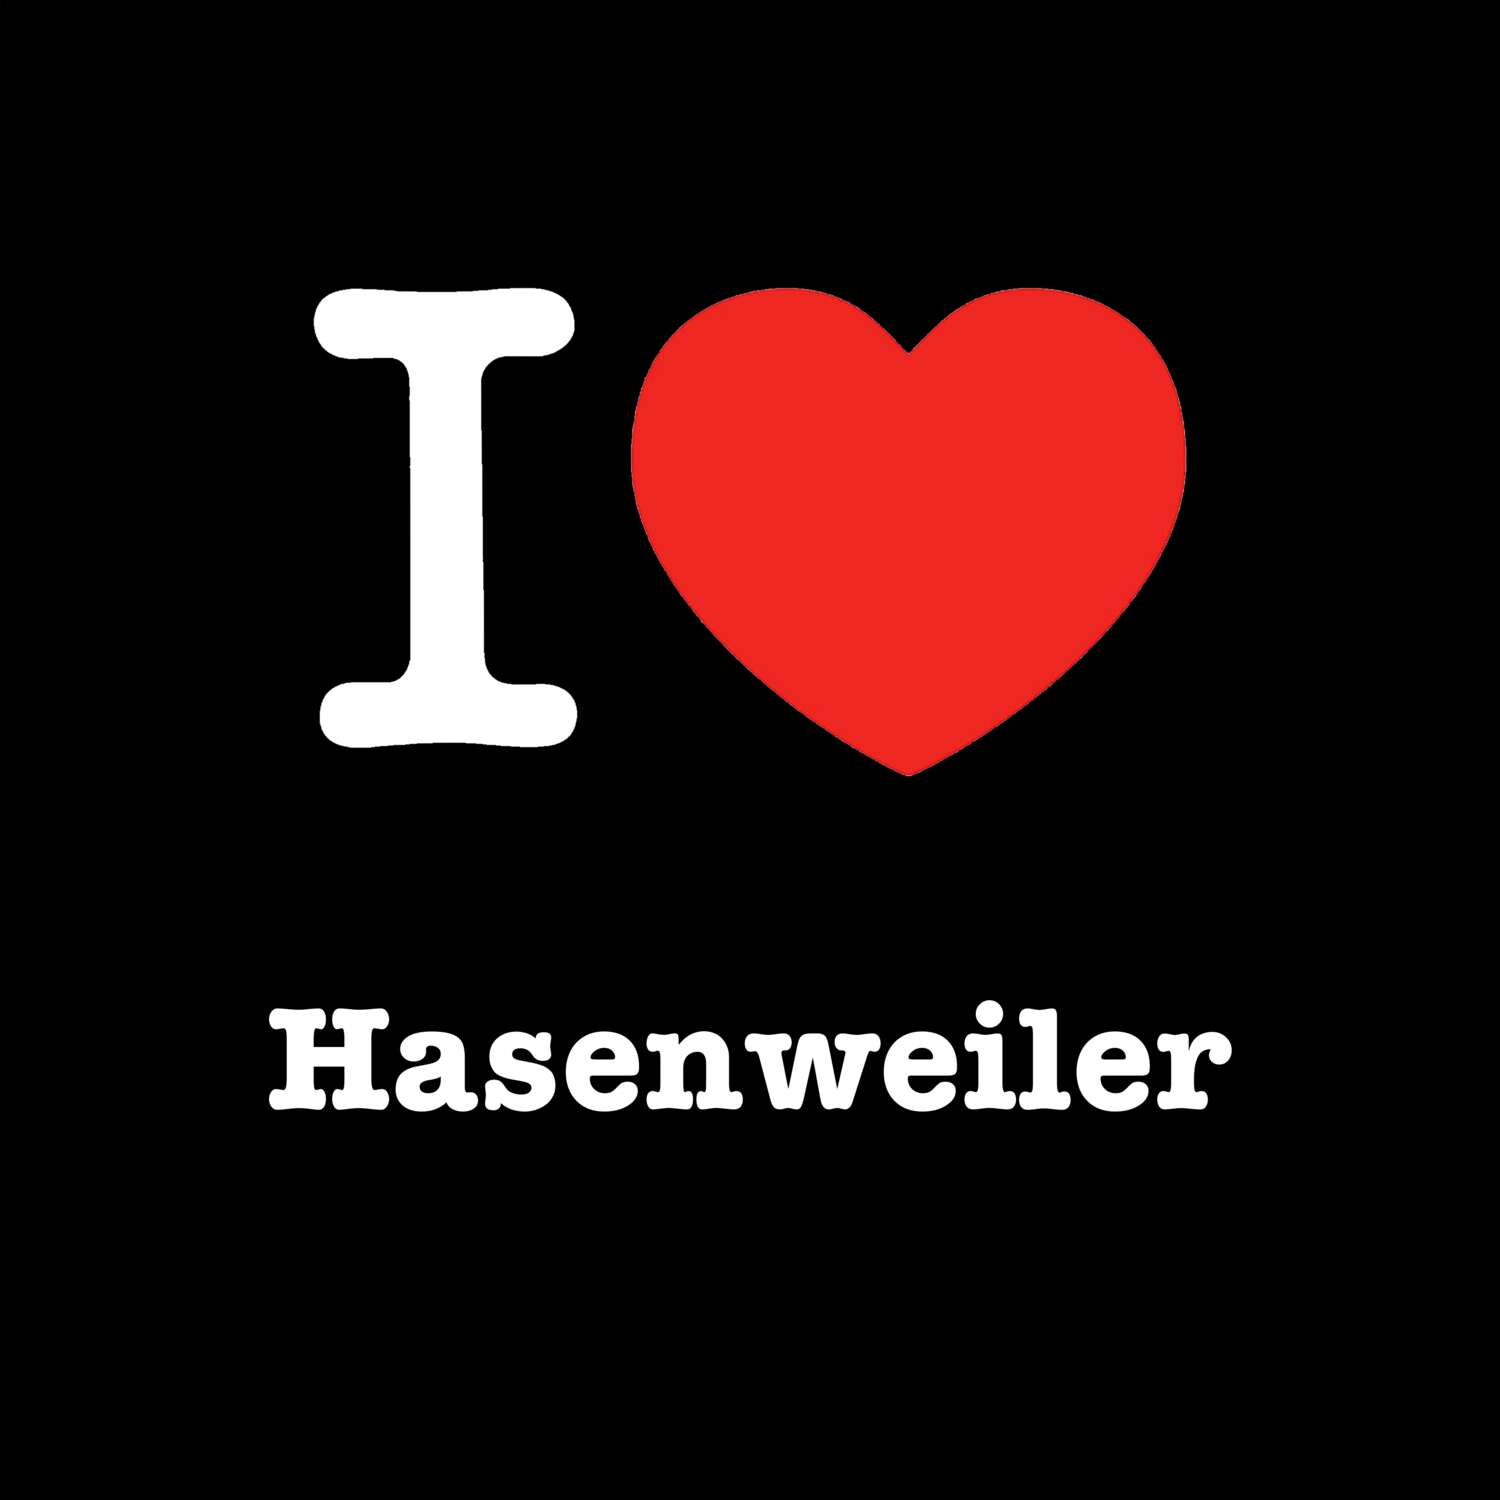 Hasenweiler T-Shirt »I love«